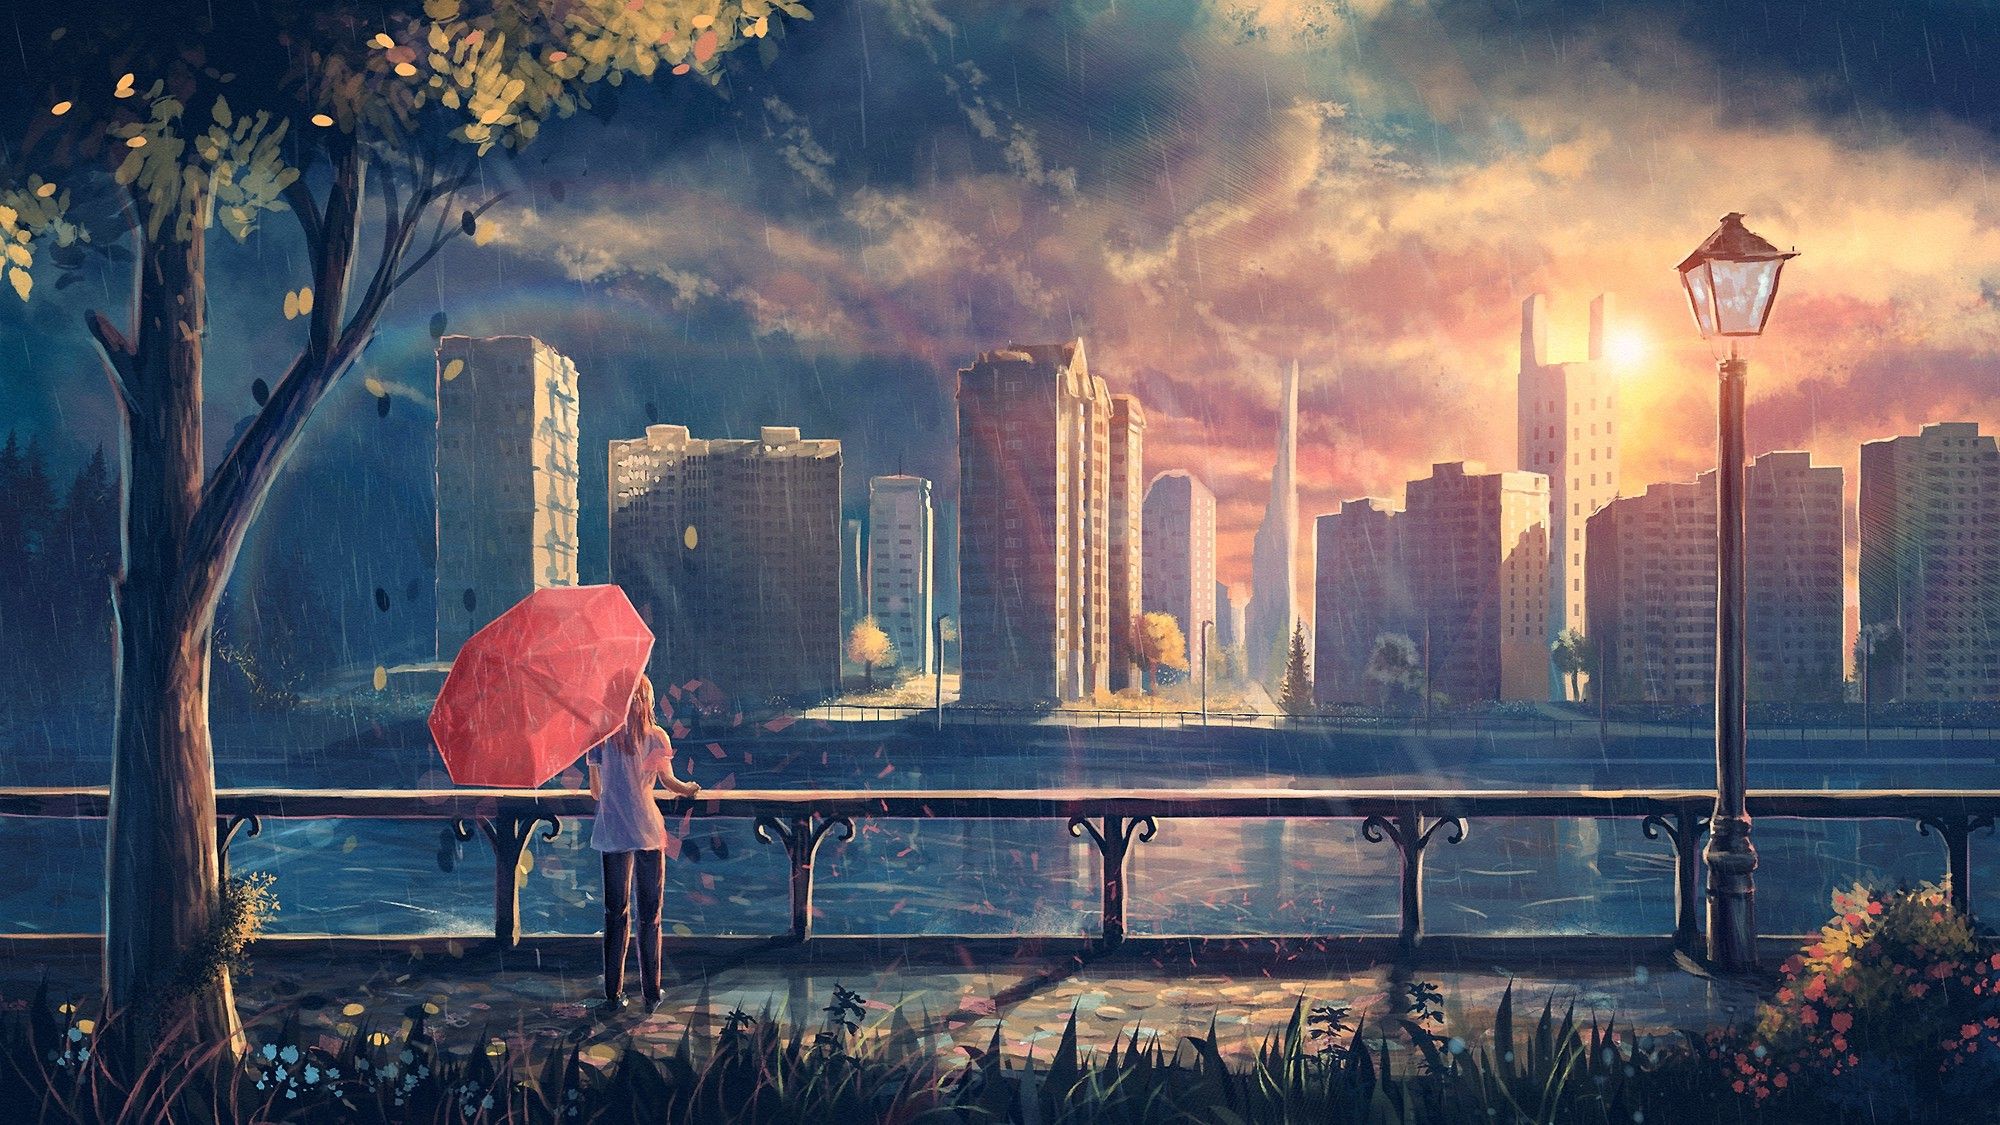 Anime girl with pink umbrella on rainy street 4K wallpaper download